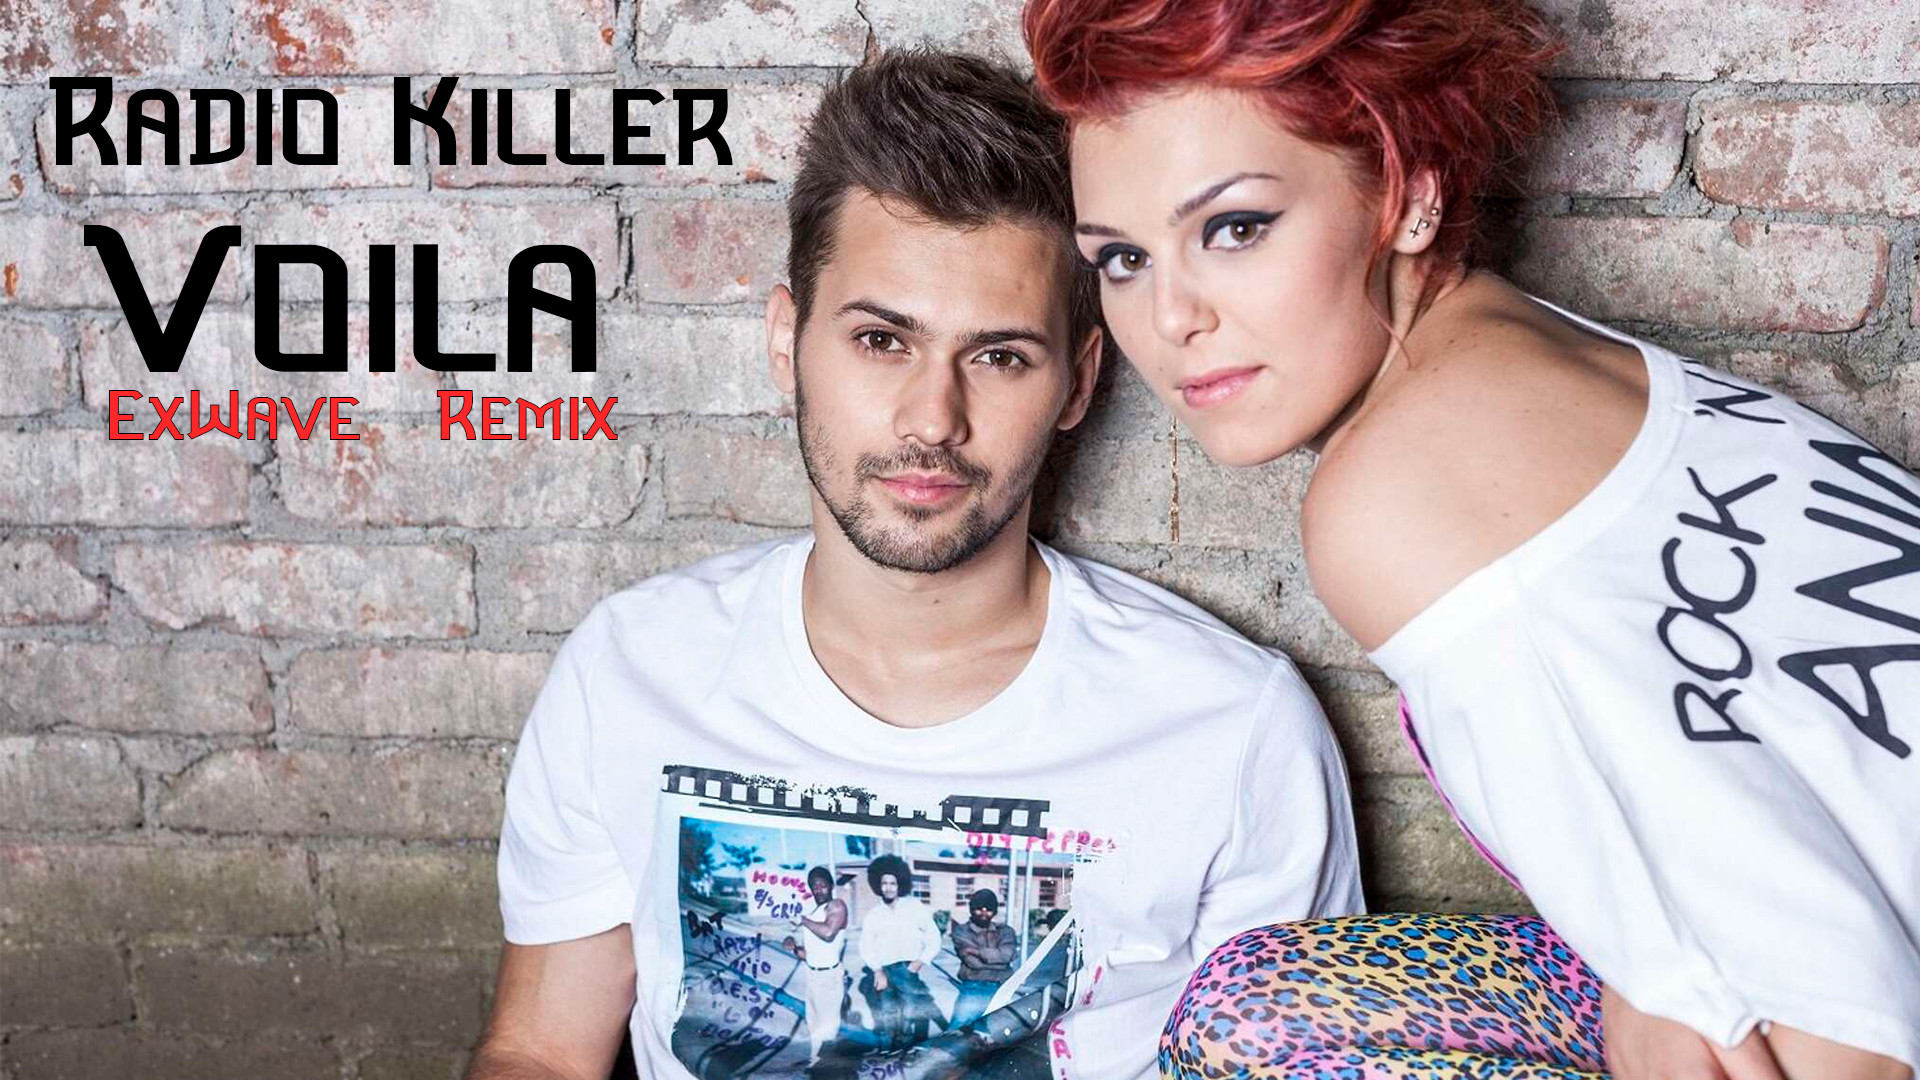 Voila killer. Radio Killer. Radio Killer voila. Radio Killer певец. "Voila" && ( исполнитель | группа | музыка | Music | Band | artist ) && (фото | photo).